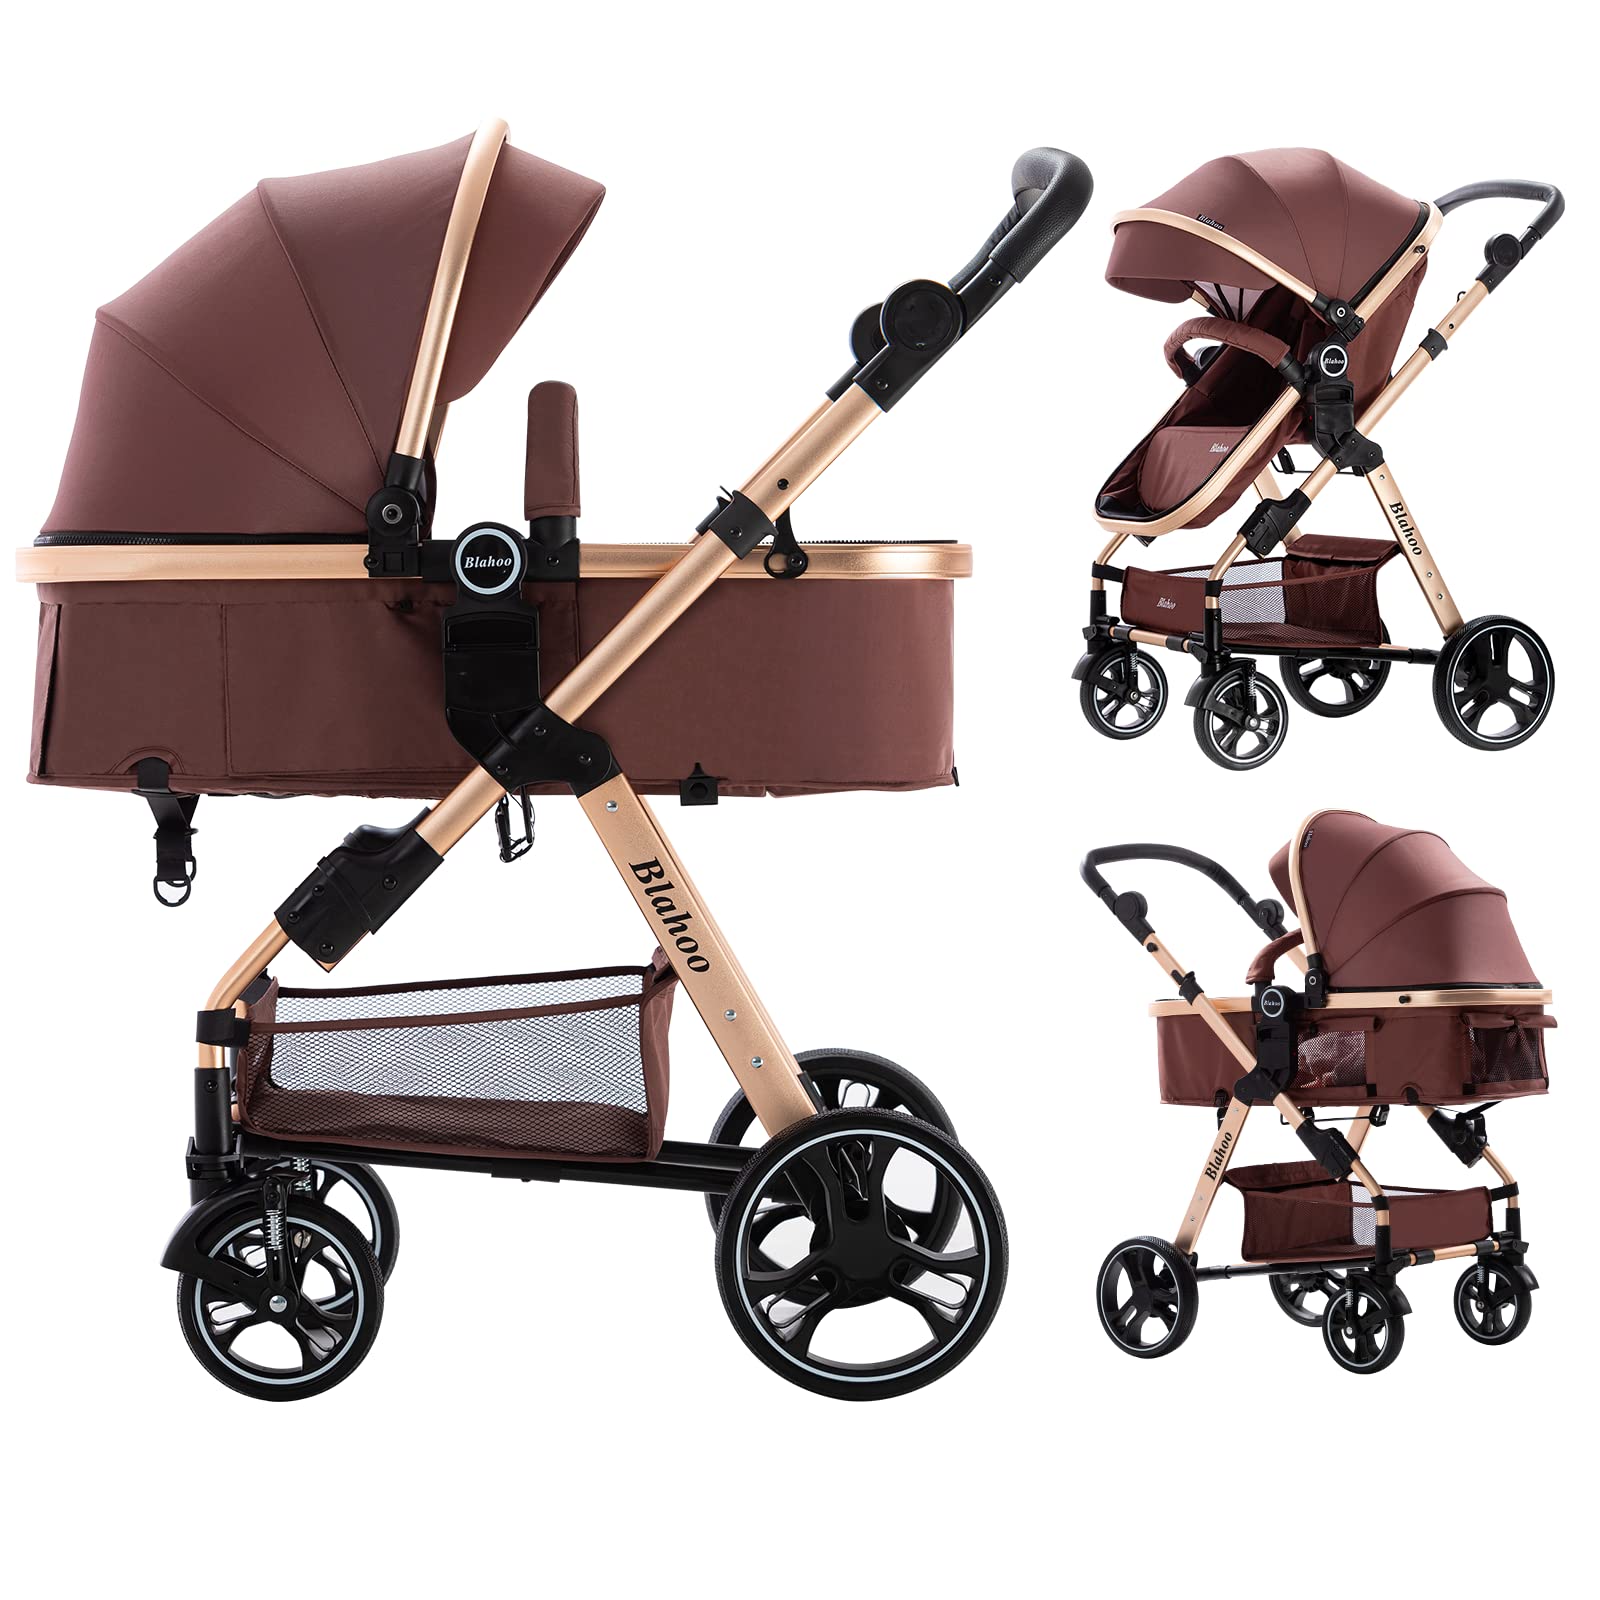 Blahoo Baby Stroller for Toddler Foldable Aluminum Alloy Pushchair with Adjustable BackrestBassinet Stroller Adjustable Directio